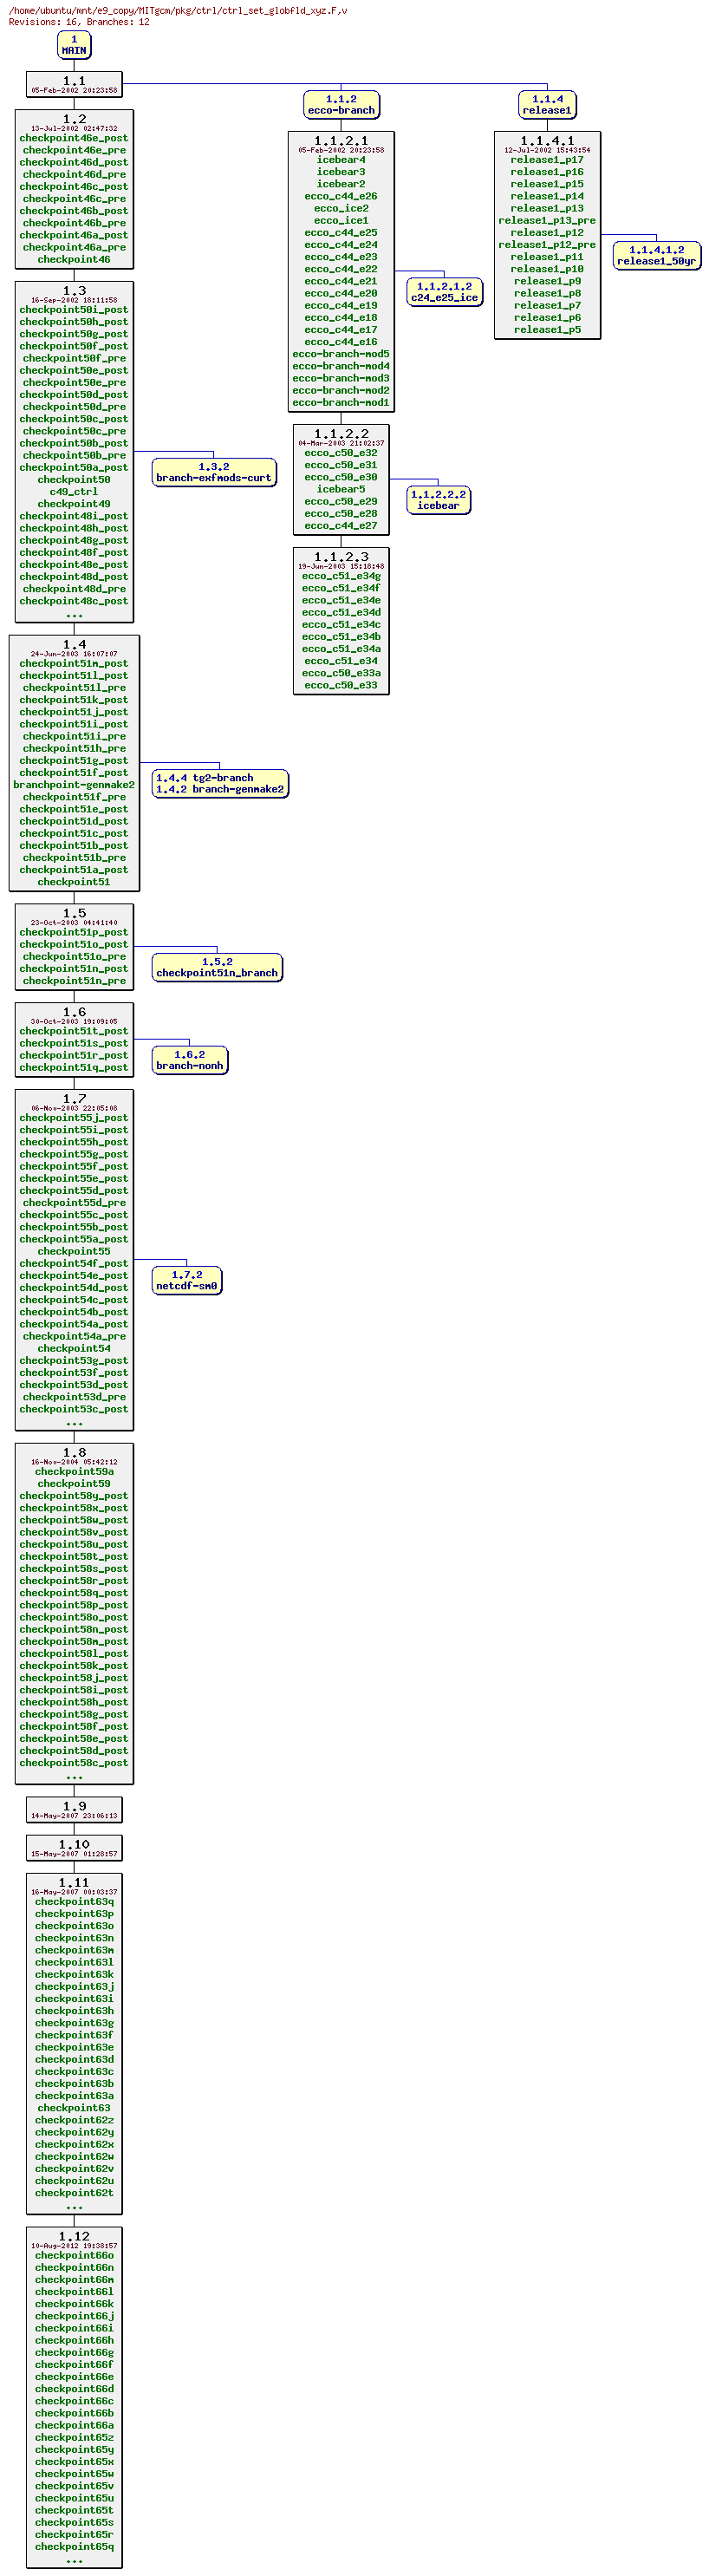 Revisions of MITgcm/pkg/ctrl/ctrl_set_globfld_xyz.F